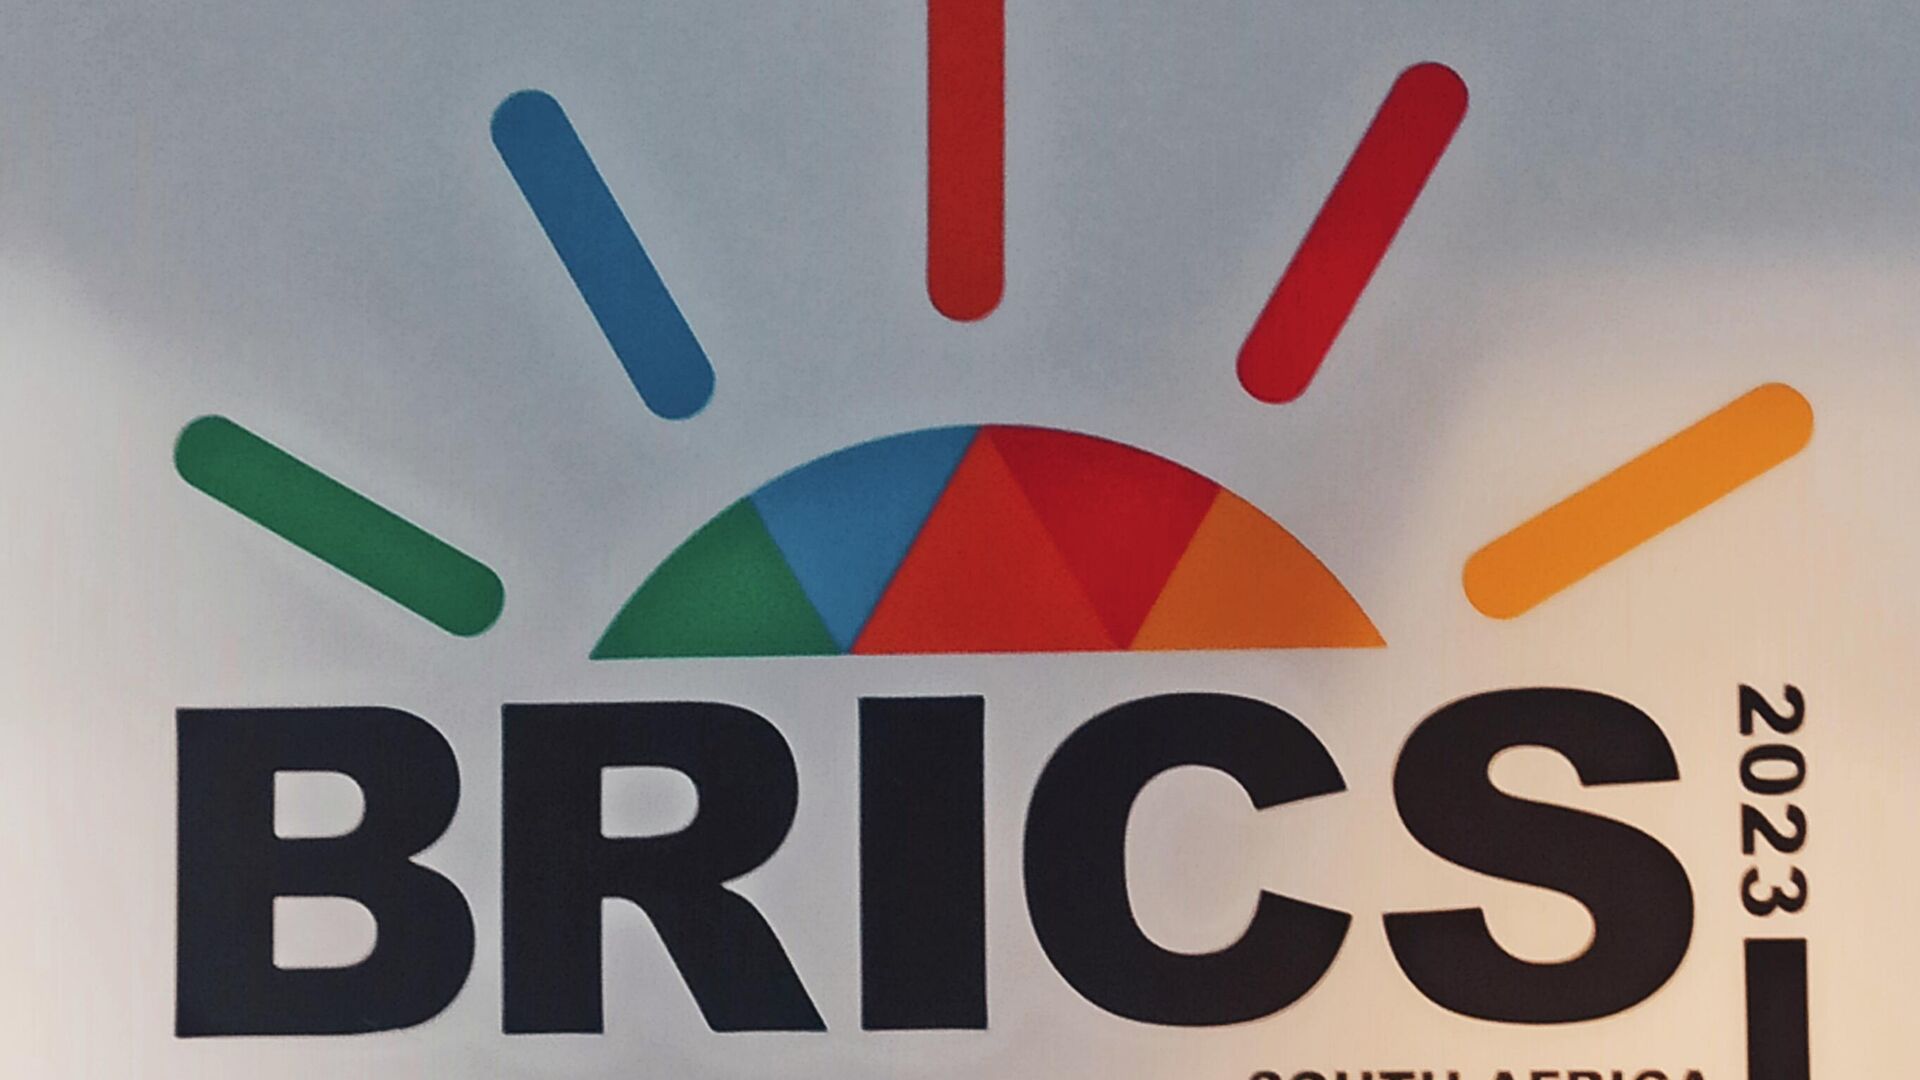 Putin and Lula emphasize unity and development at BRICS Summit